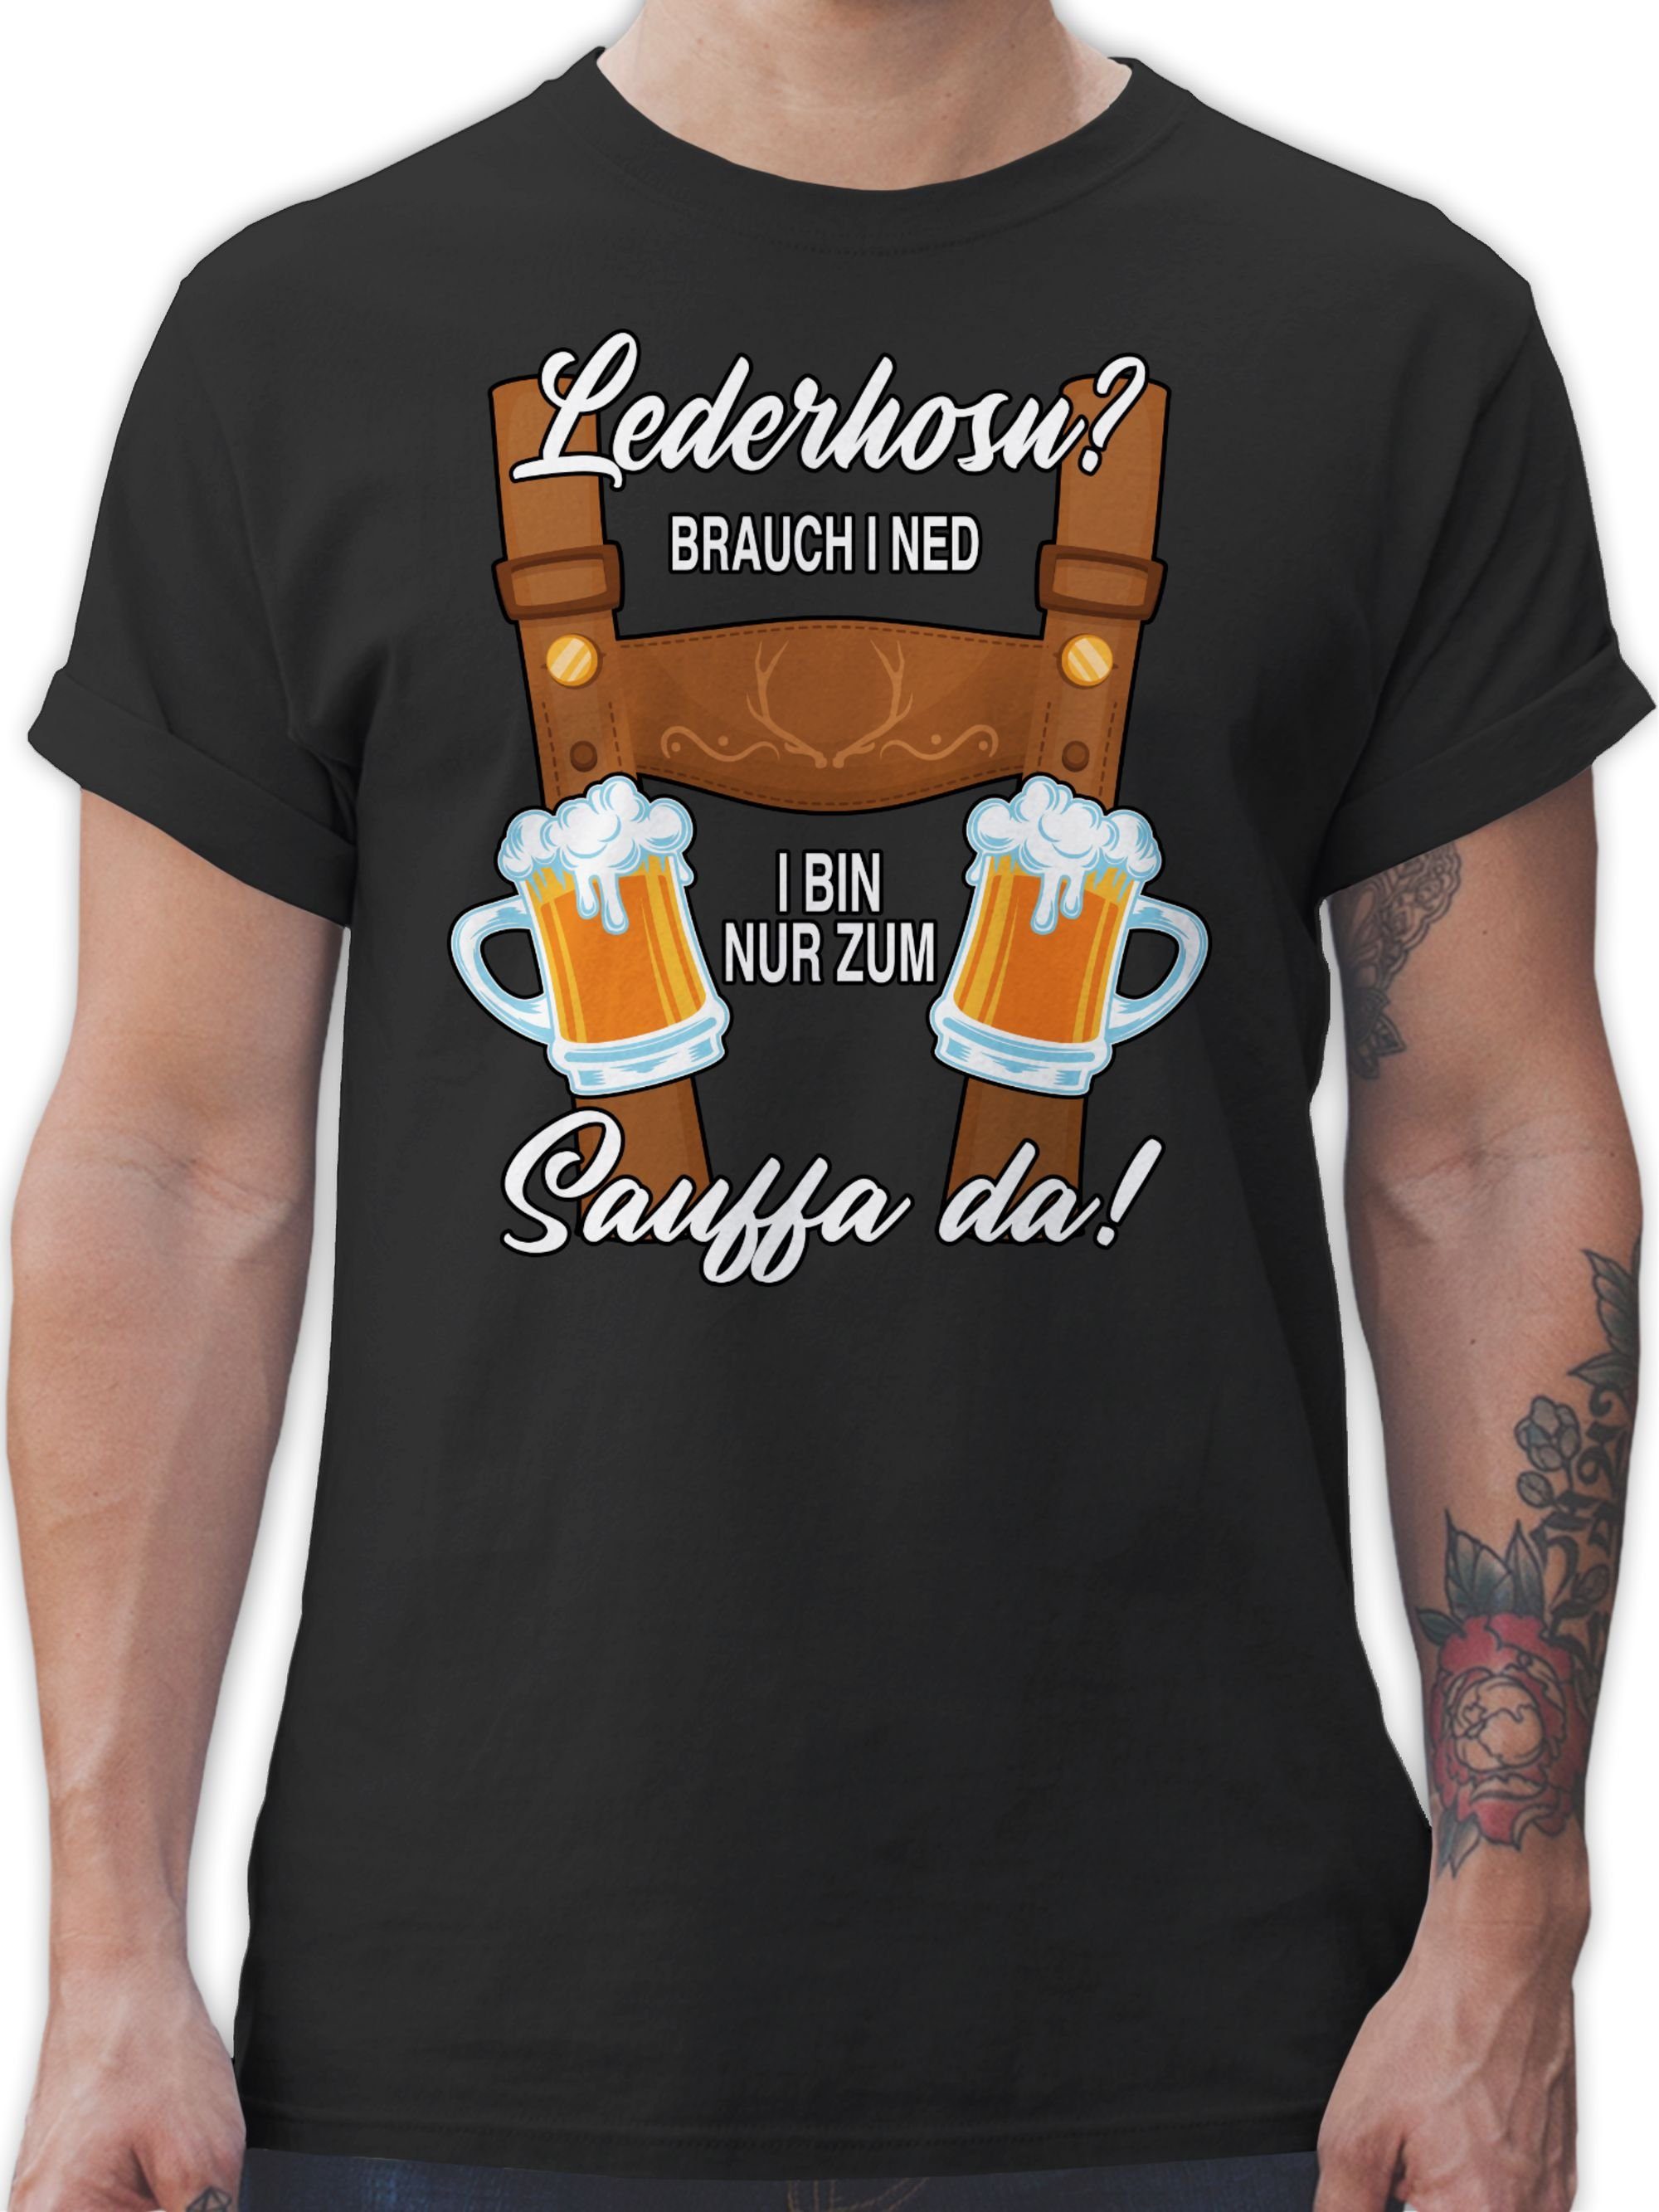 Shirtracer T-Shirt Trachten Outfit Sauffa Lederhose Lausbub Mode für Oktoberfest Herren 01 Schwarz